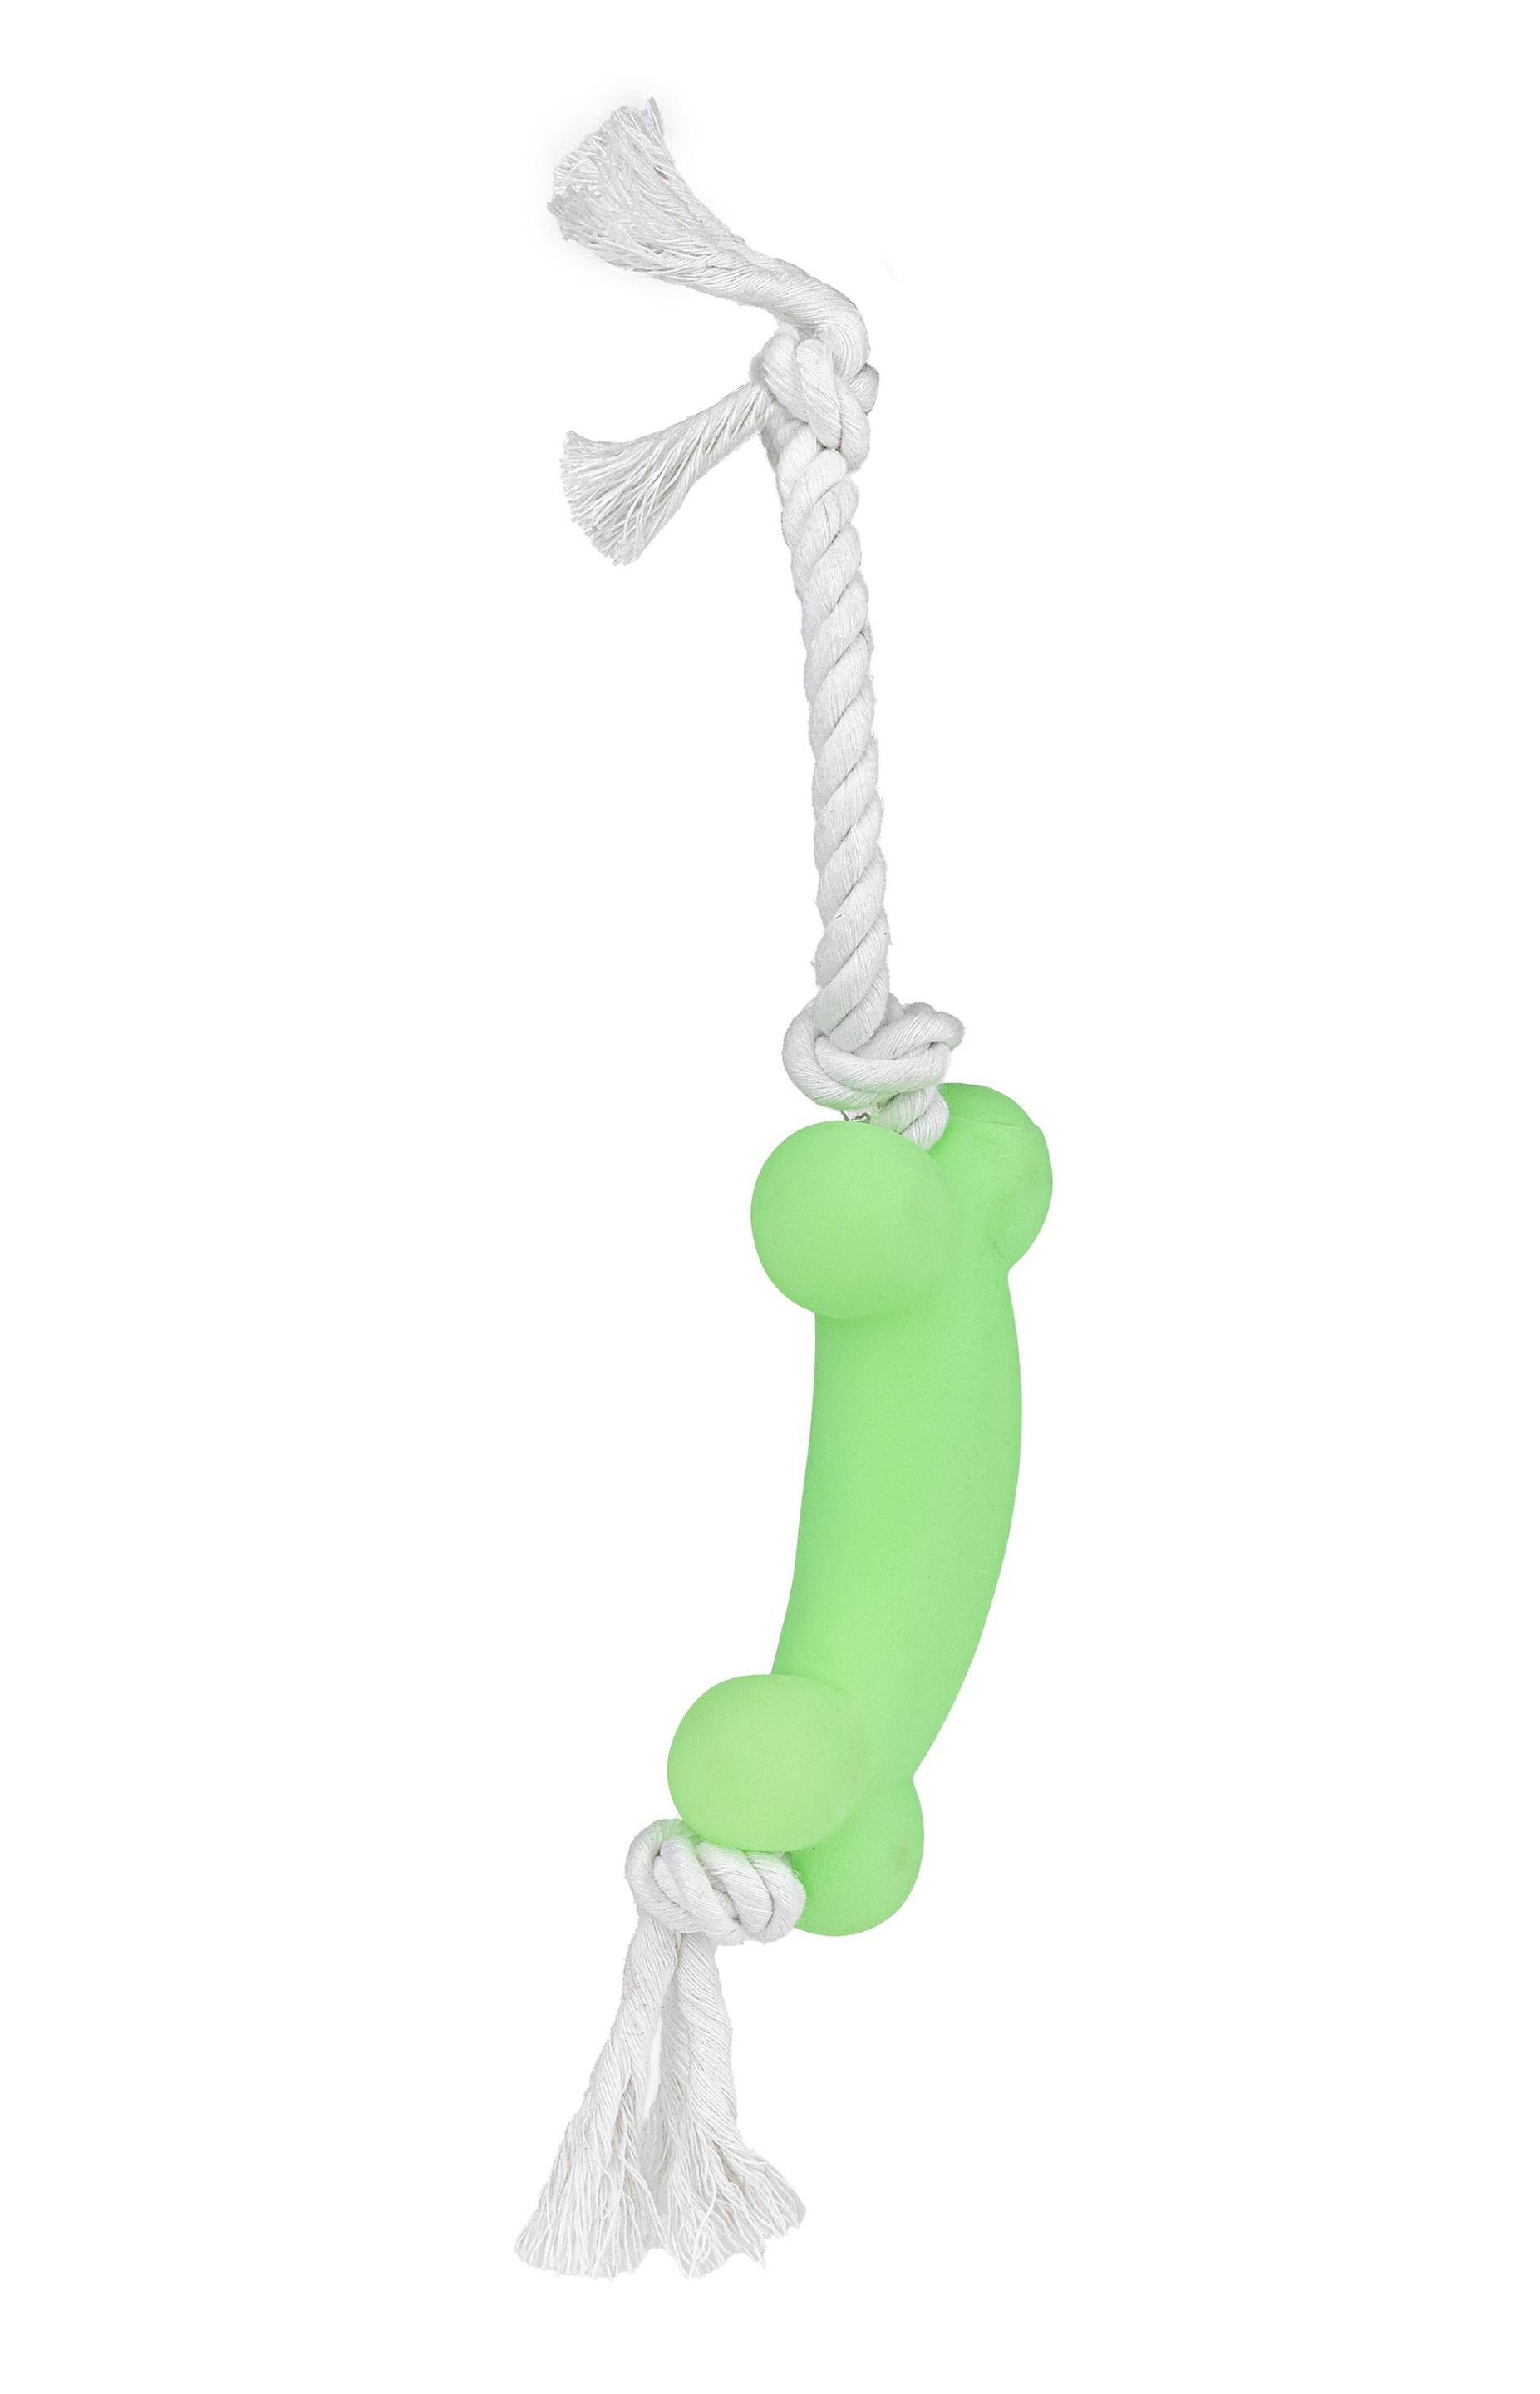 Seilspielzeug mit einem Knochen  Happet Z535 grün (Z-Z535FI)